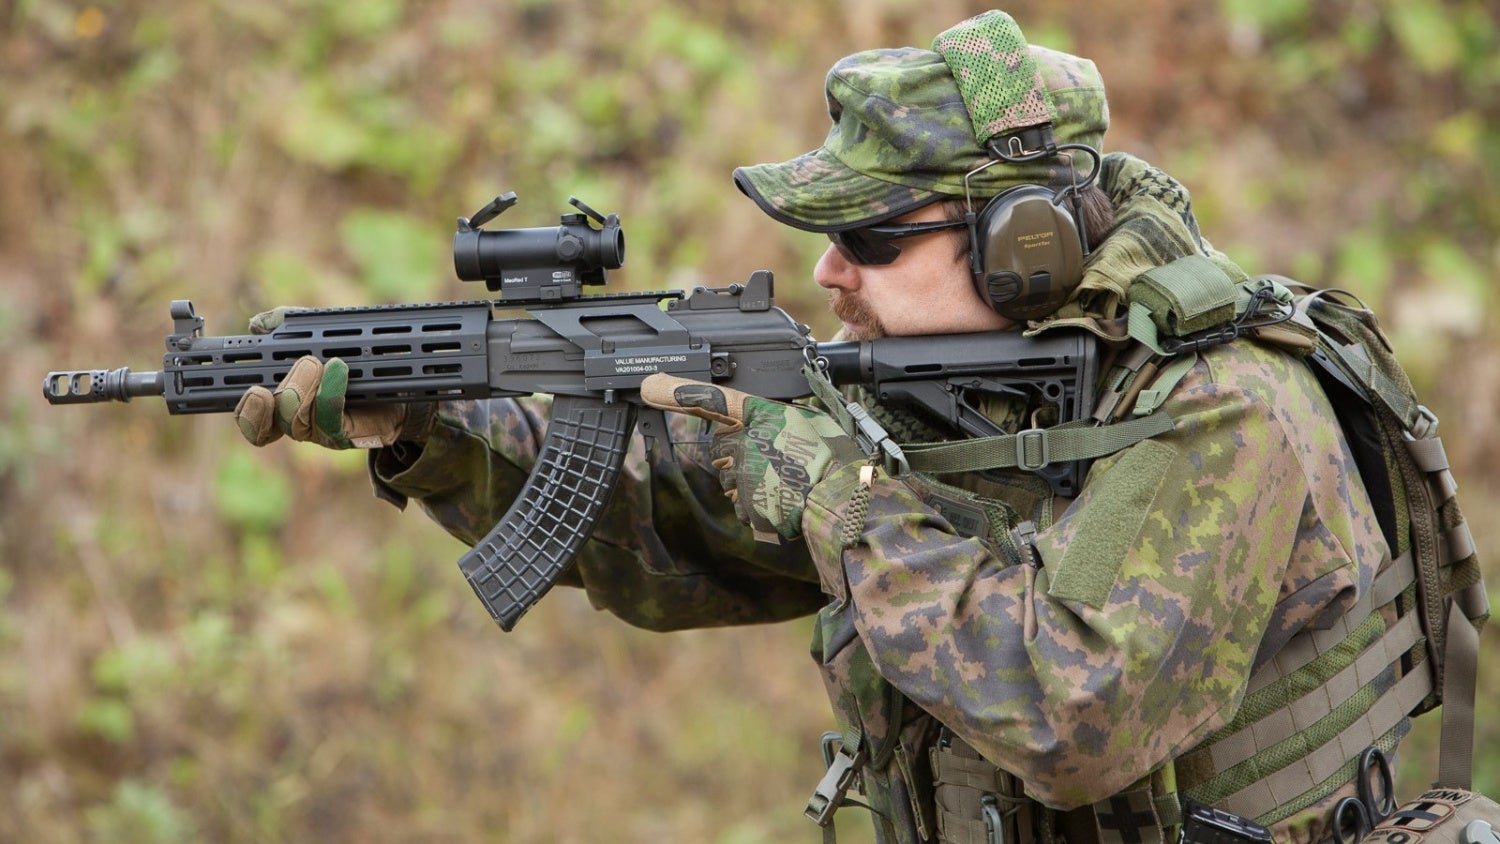 AK 2.0 upgrade kit on Finnish RK62 rifle